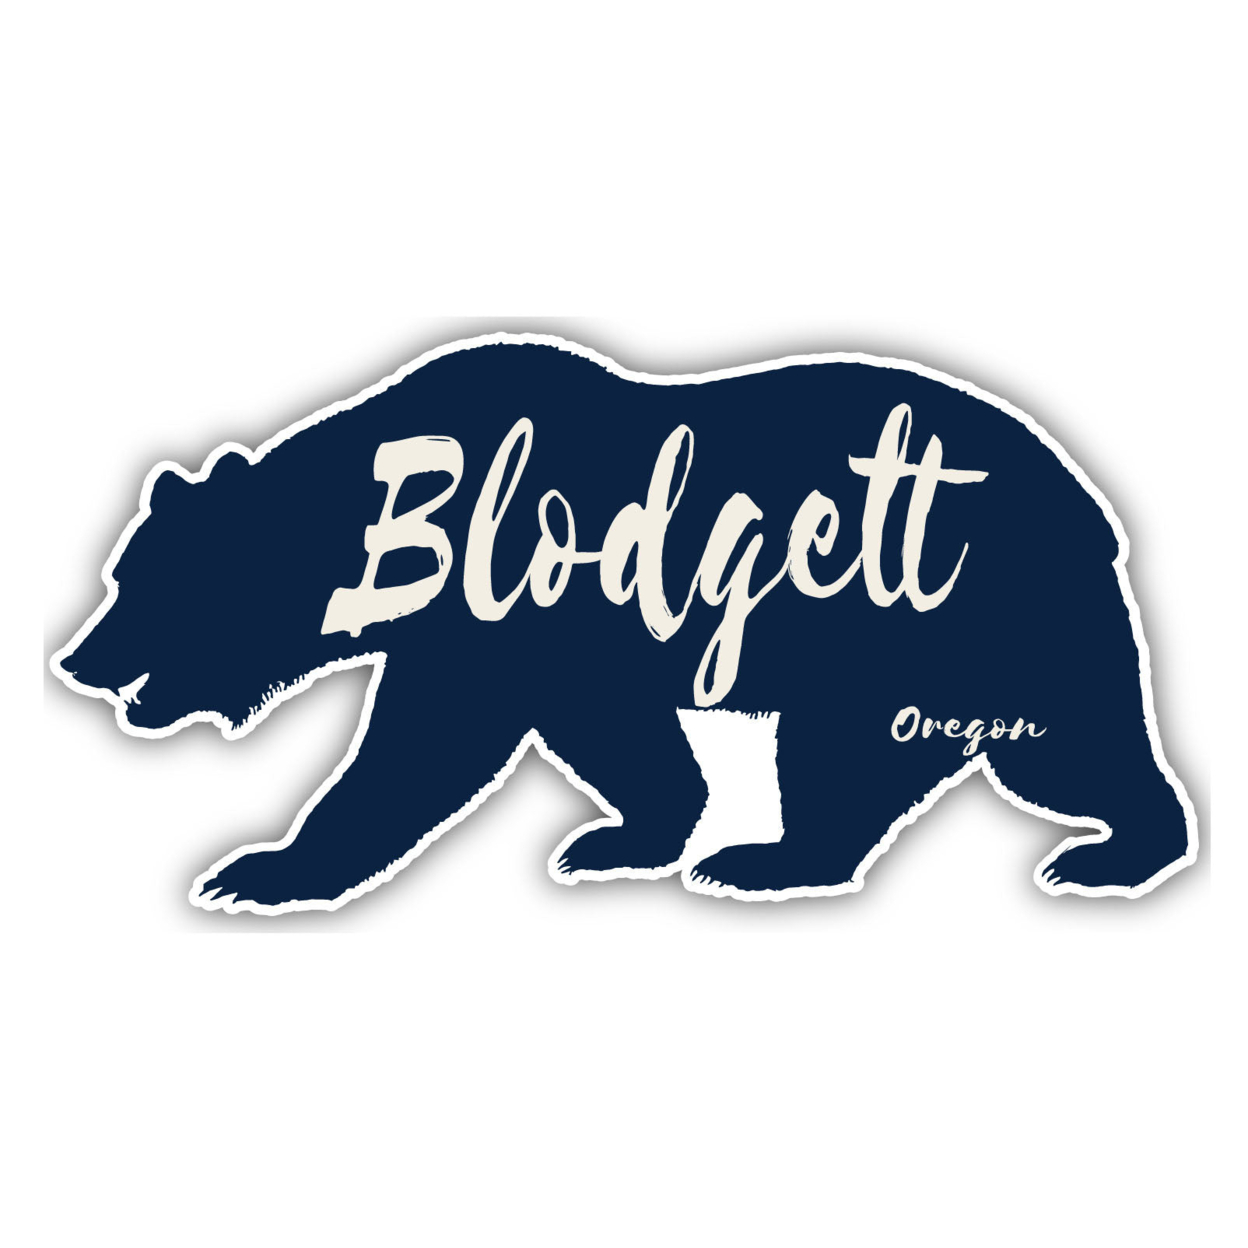 Blodgett Oregon Souvenir Decorative Stickers (Choose Theme And Size) - 4-Pack, 4-Inch, Bear